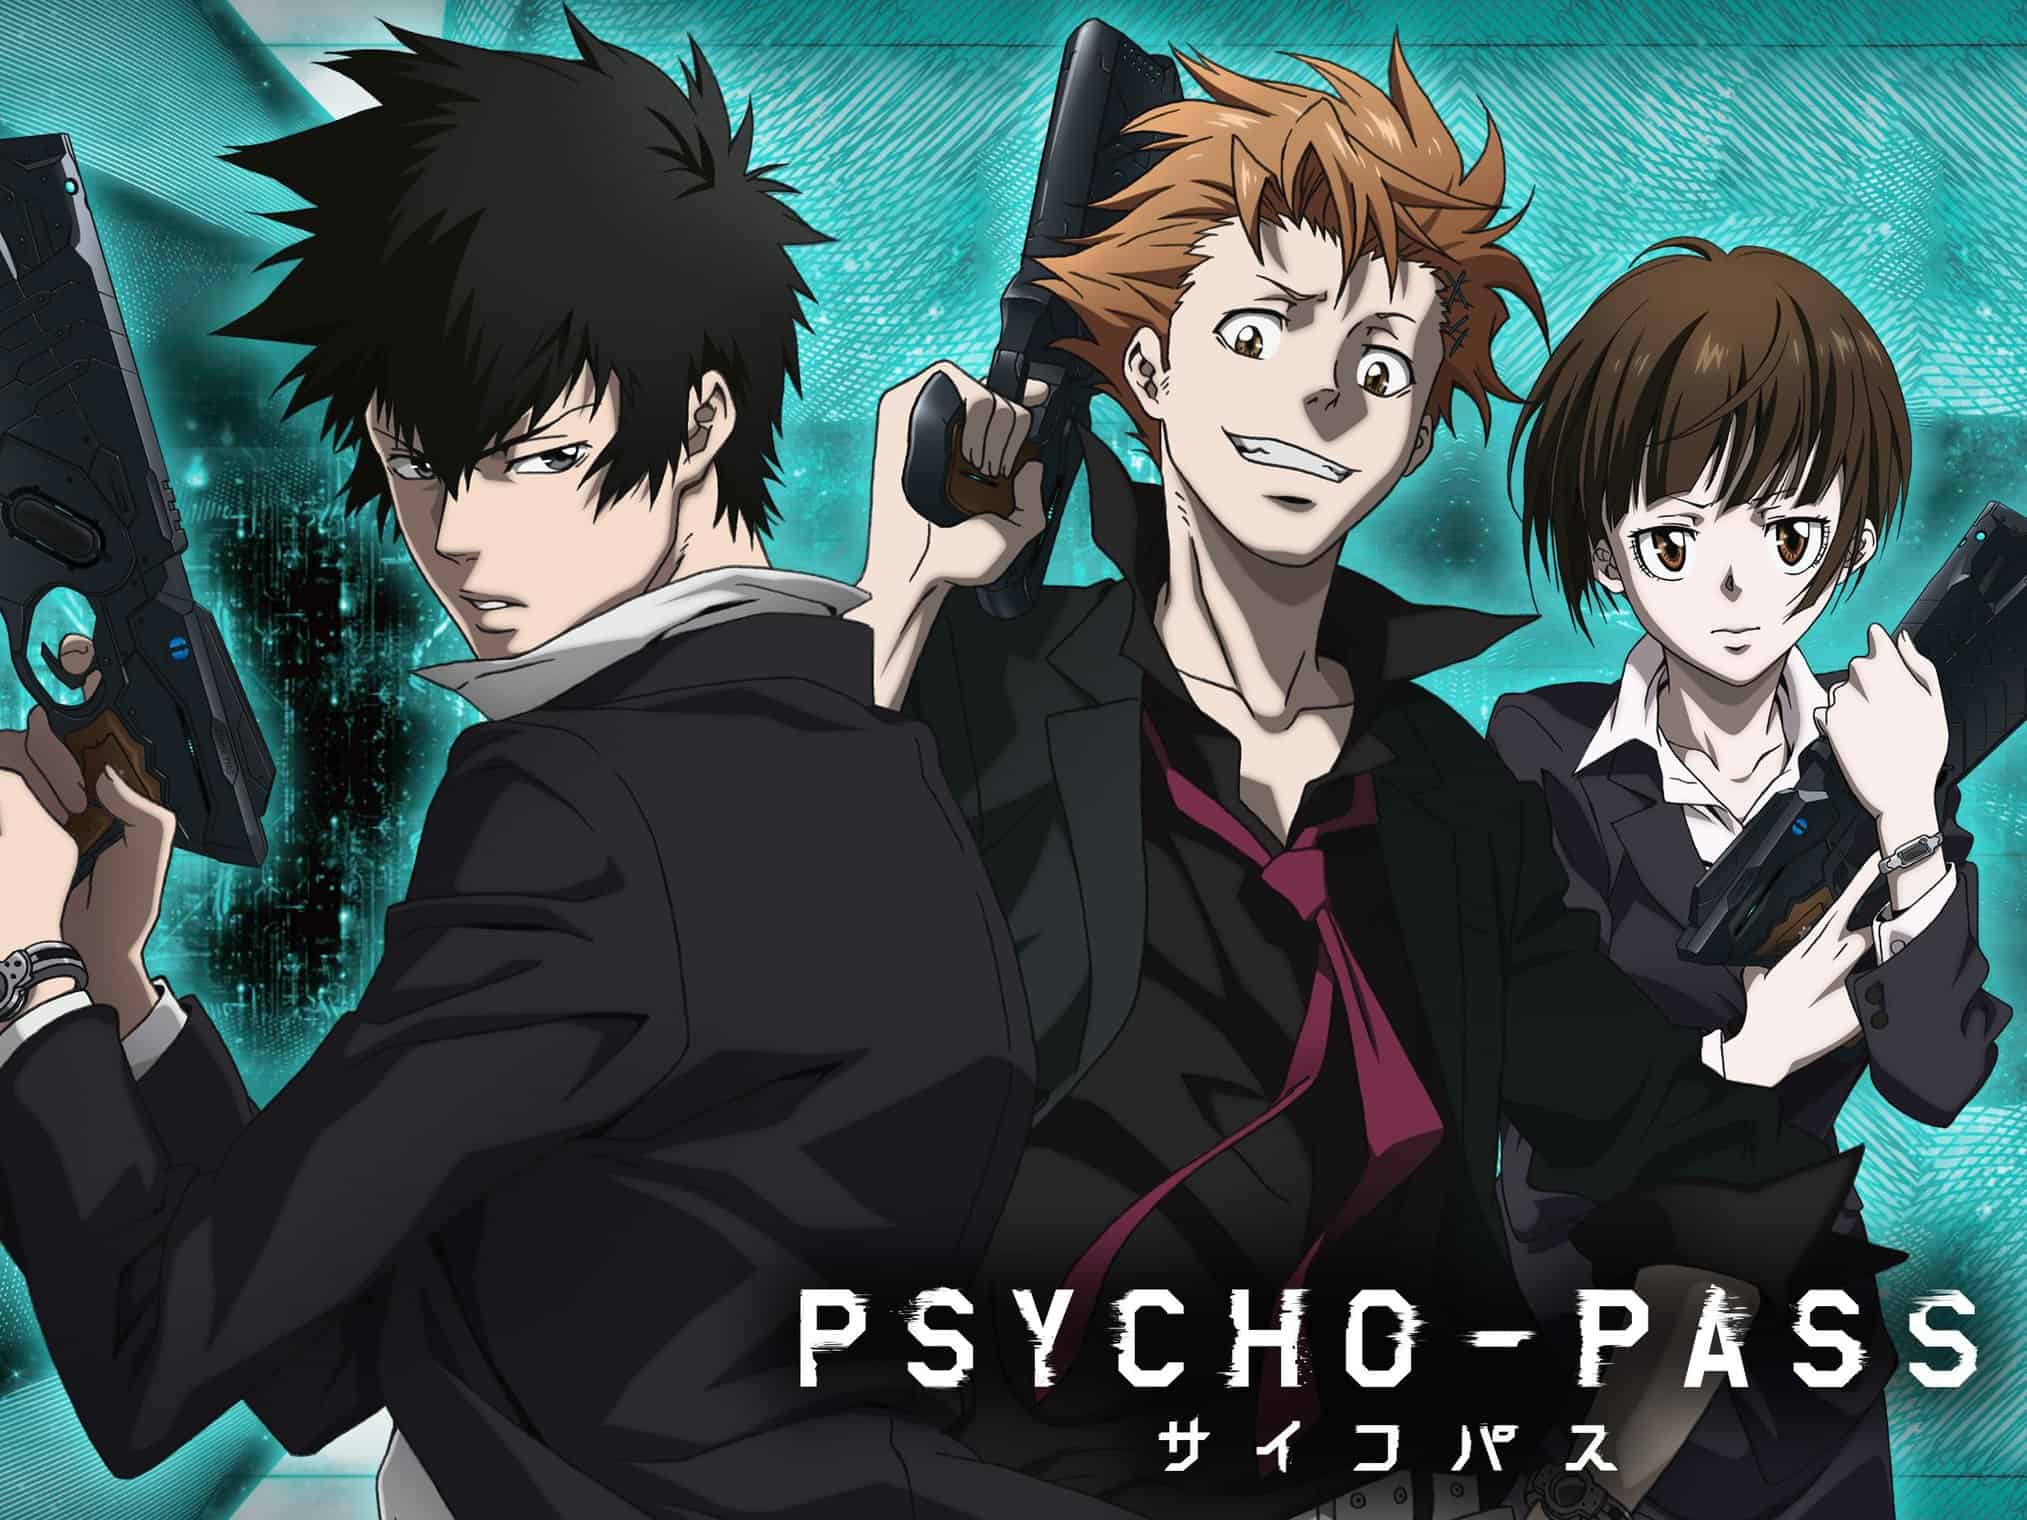 Psycho Pass anime similaire à Death Note